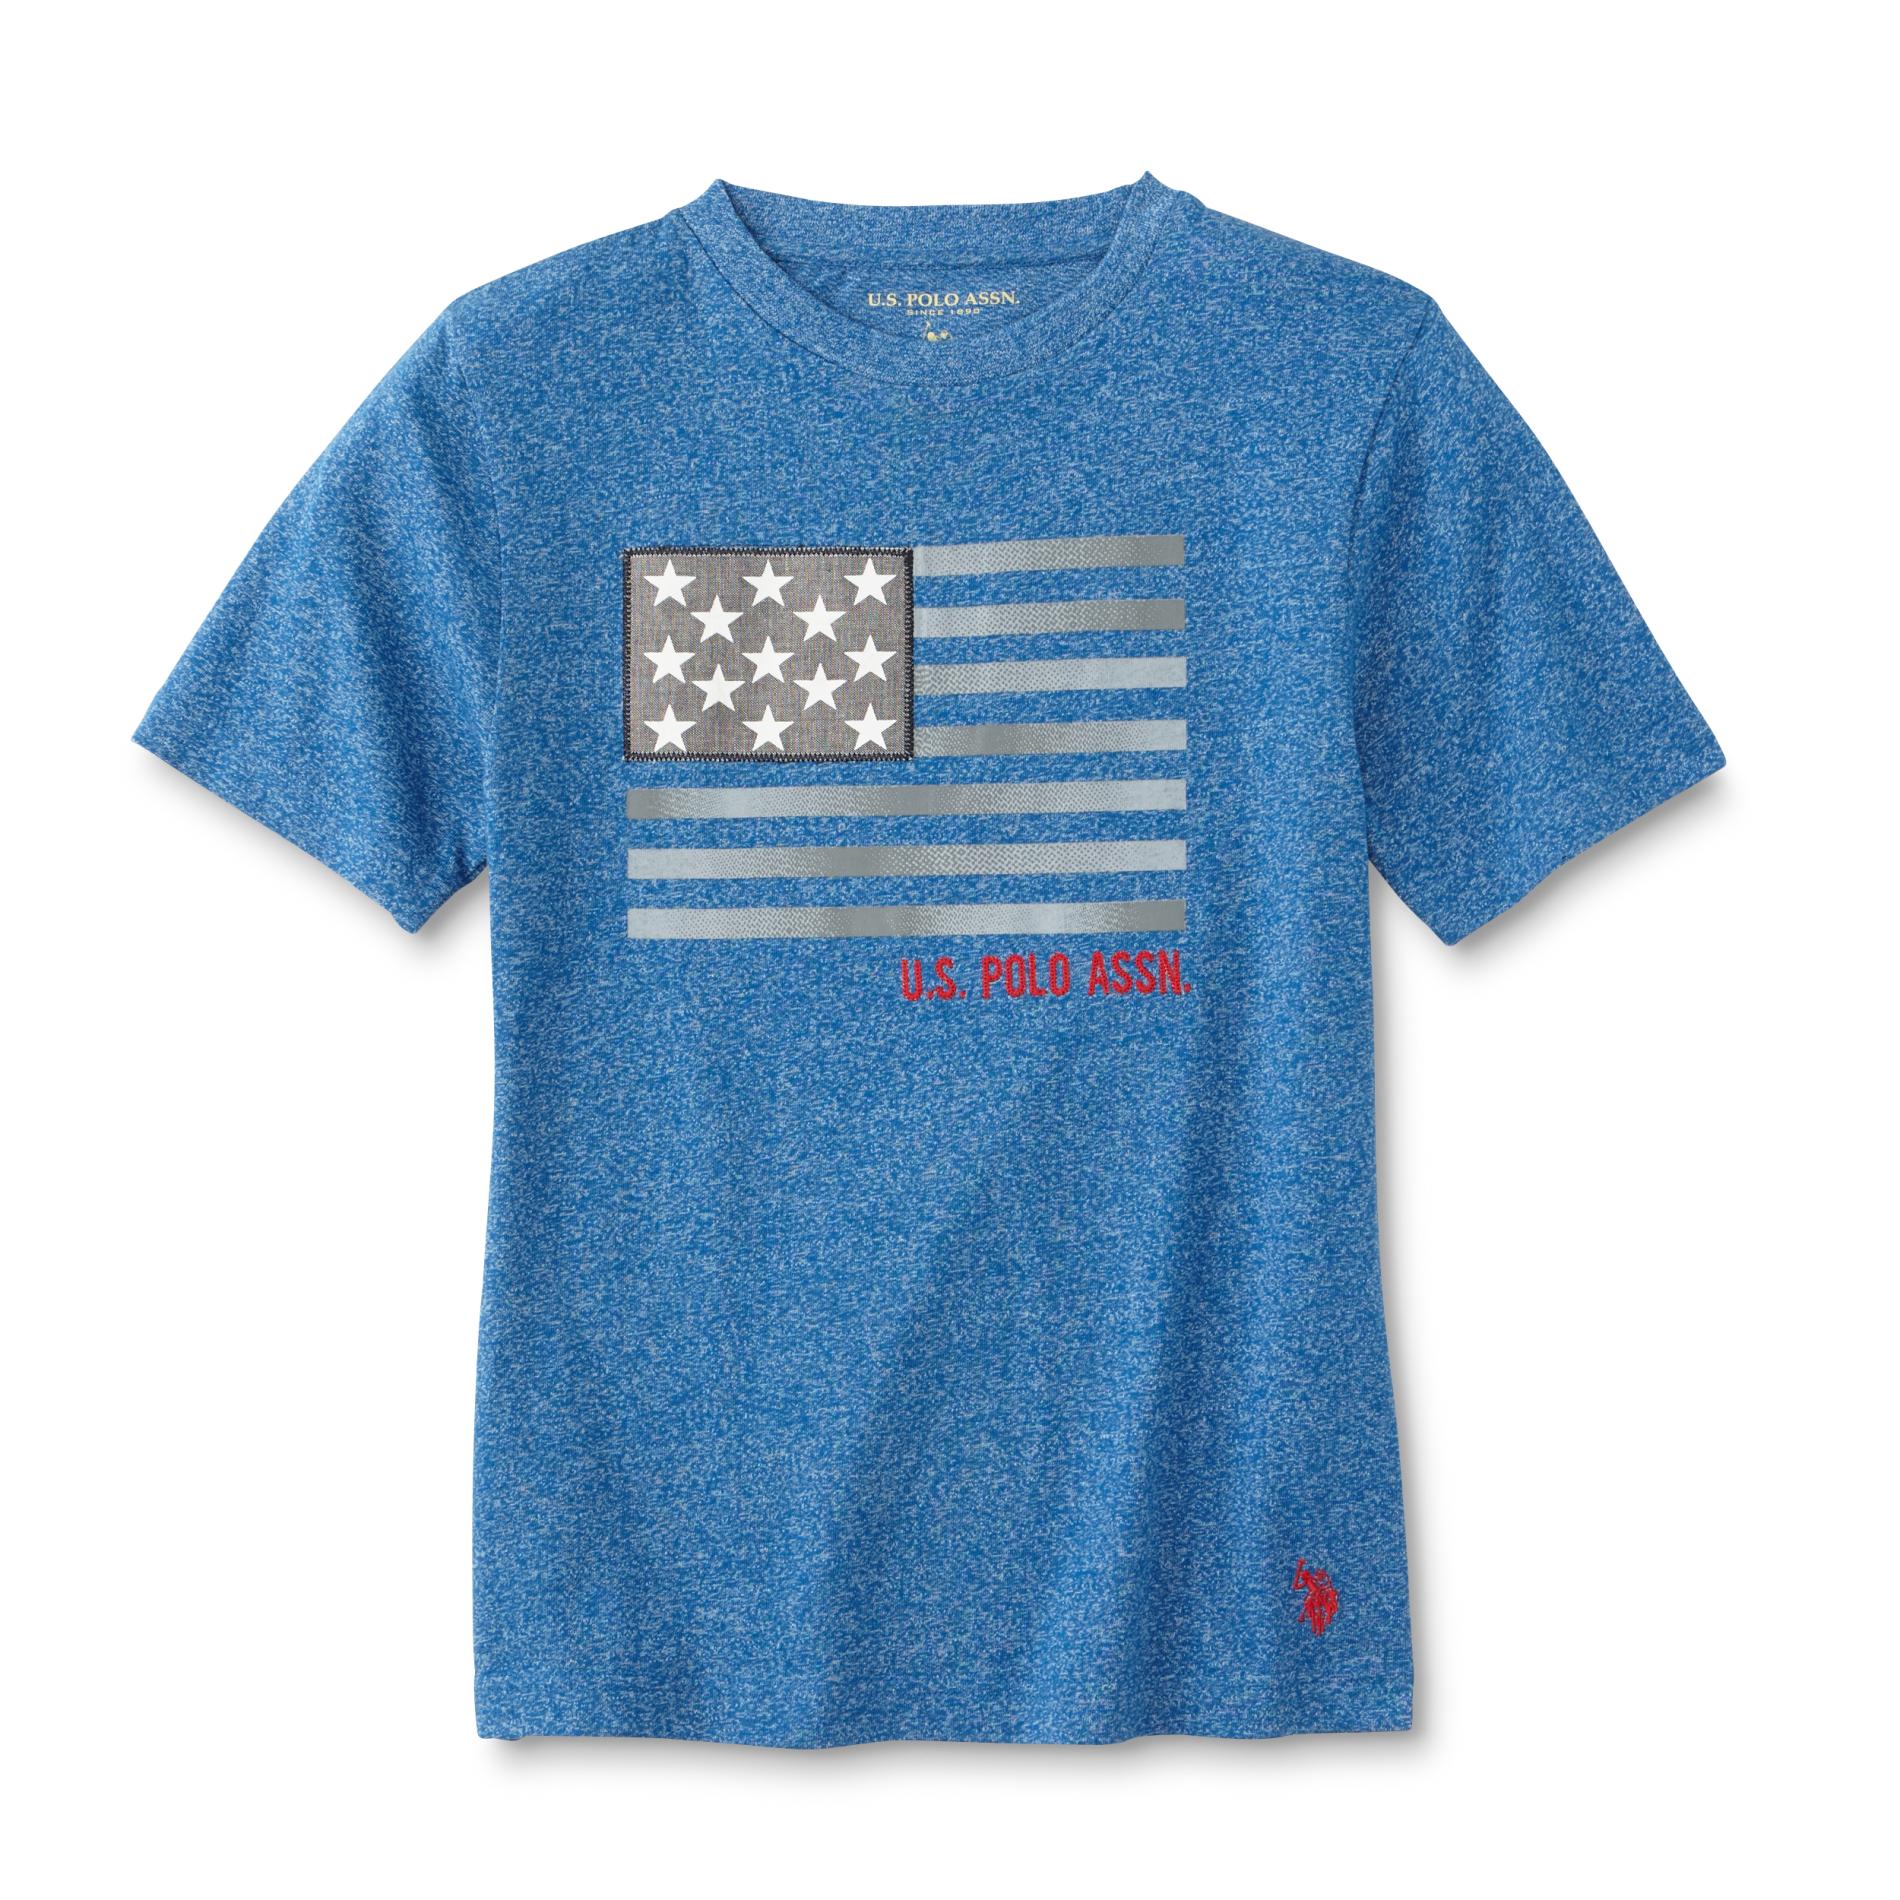 U.S. Polo Assn. Boys' Graphic T-Shirt - American Flag